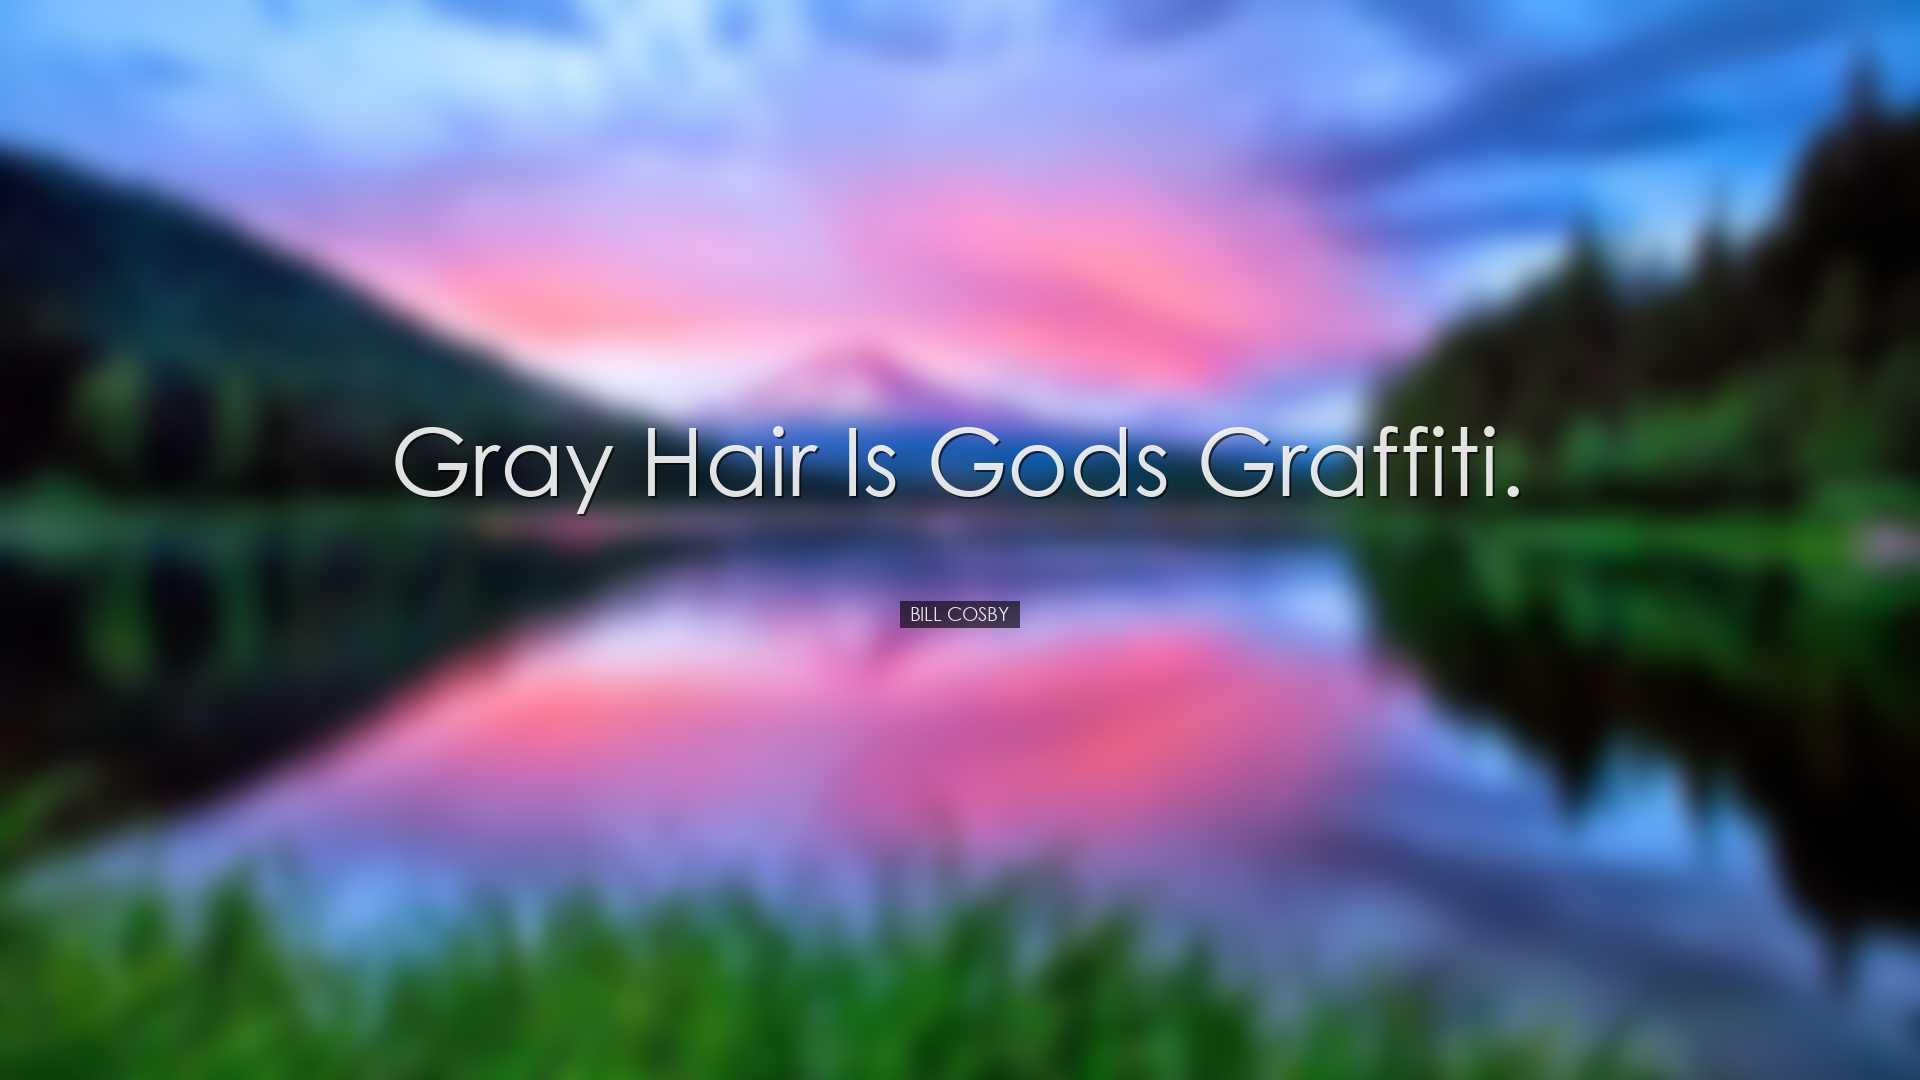 Gray hair is Gods graffiti. - Bill Cosby